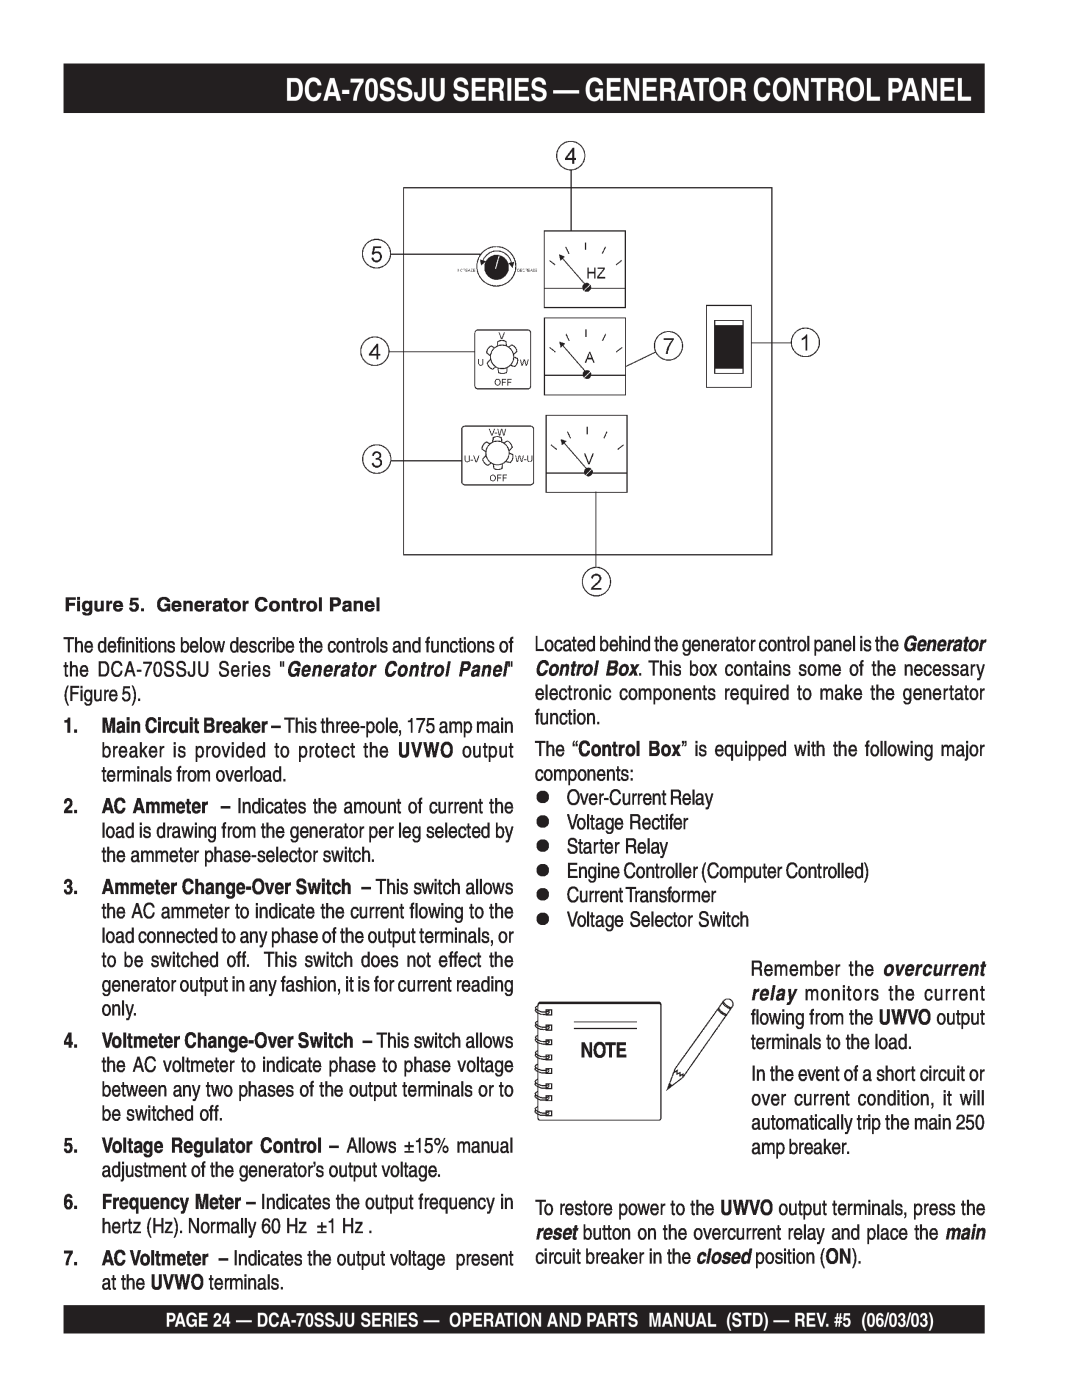 Multiquip operation manual DCA-70SSJUSERIES — GENERATOR CONTROL PANEL 